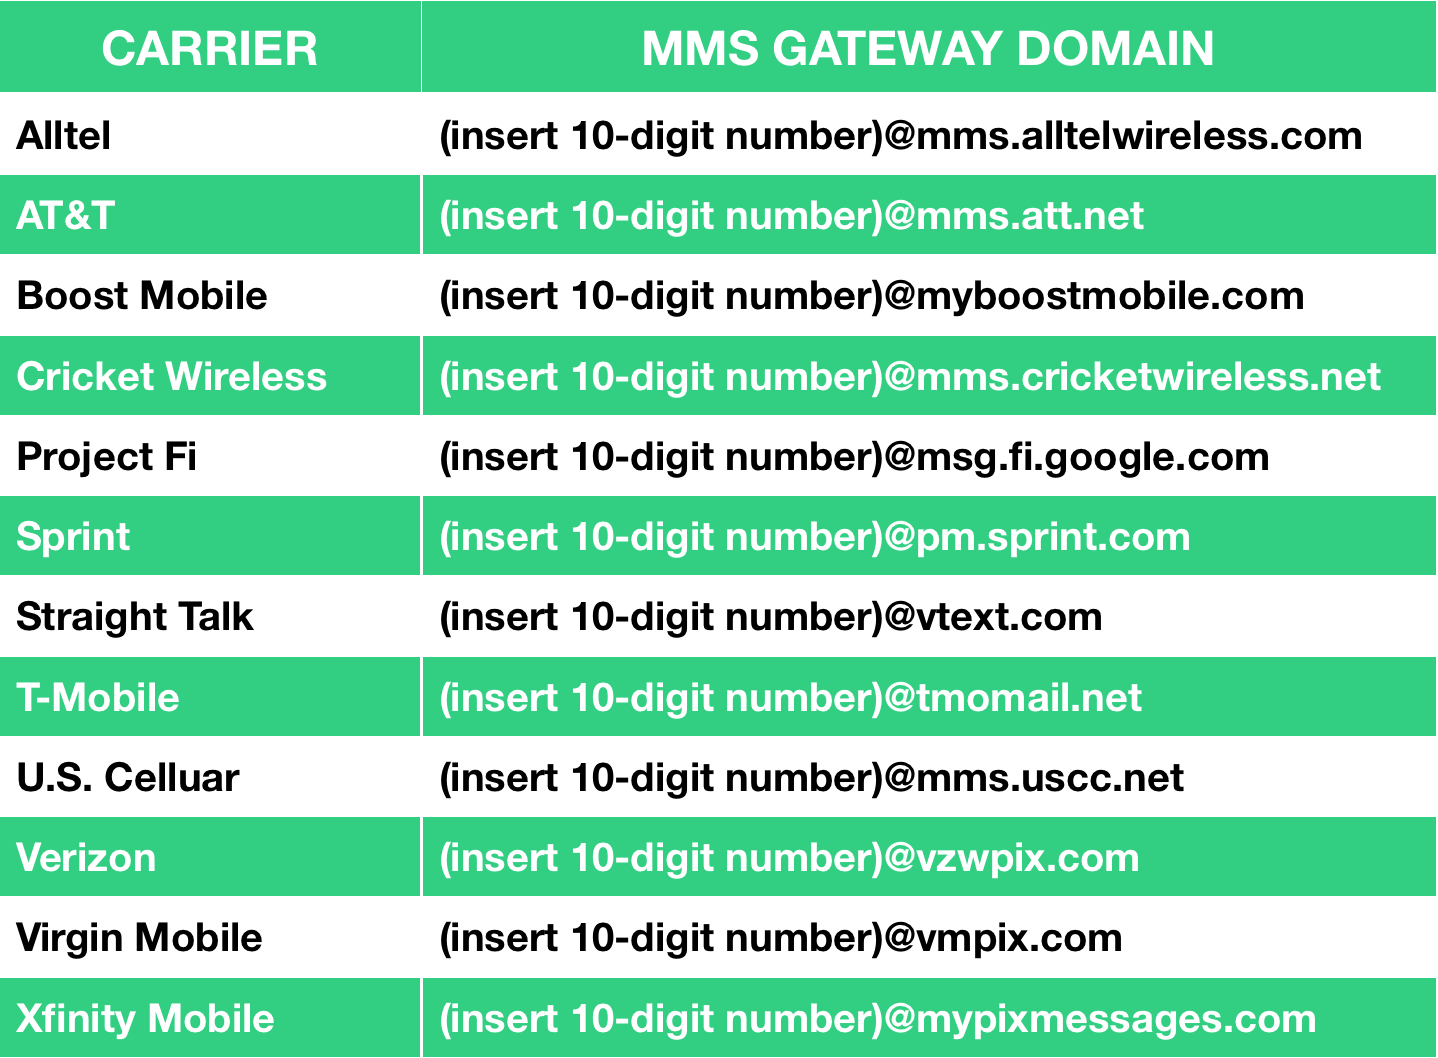 MMS_Gateway_Domains.png